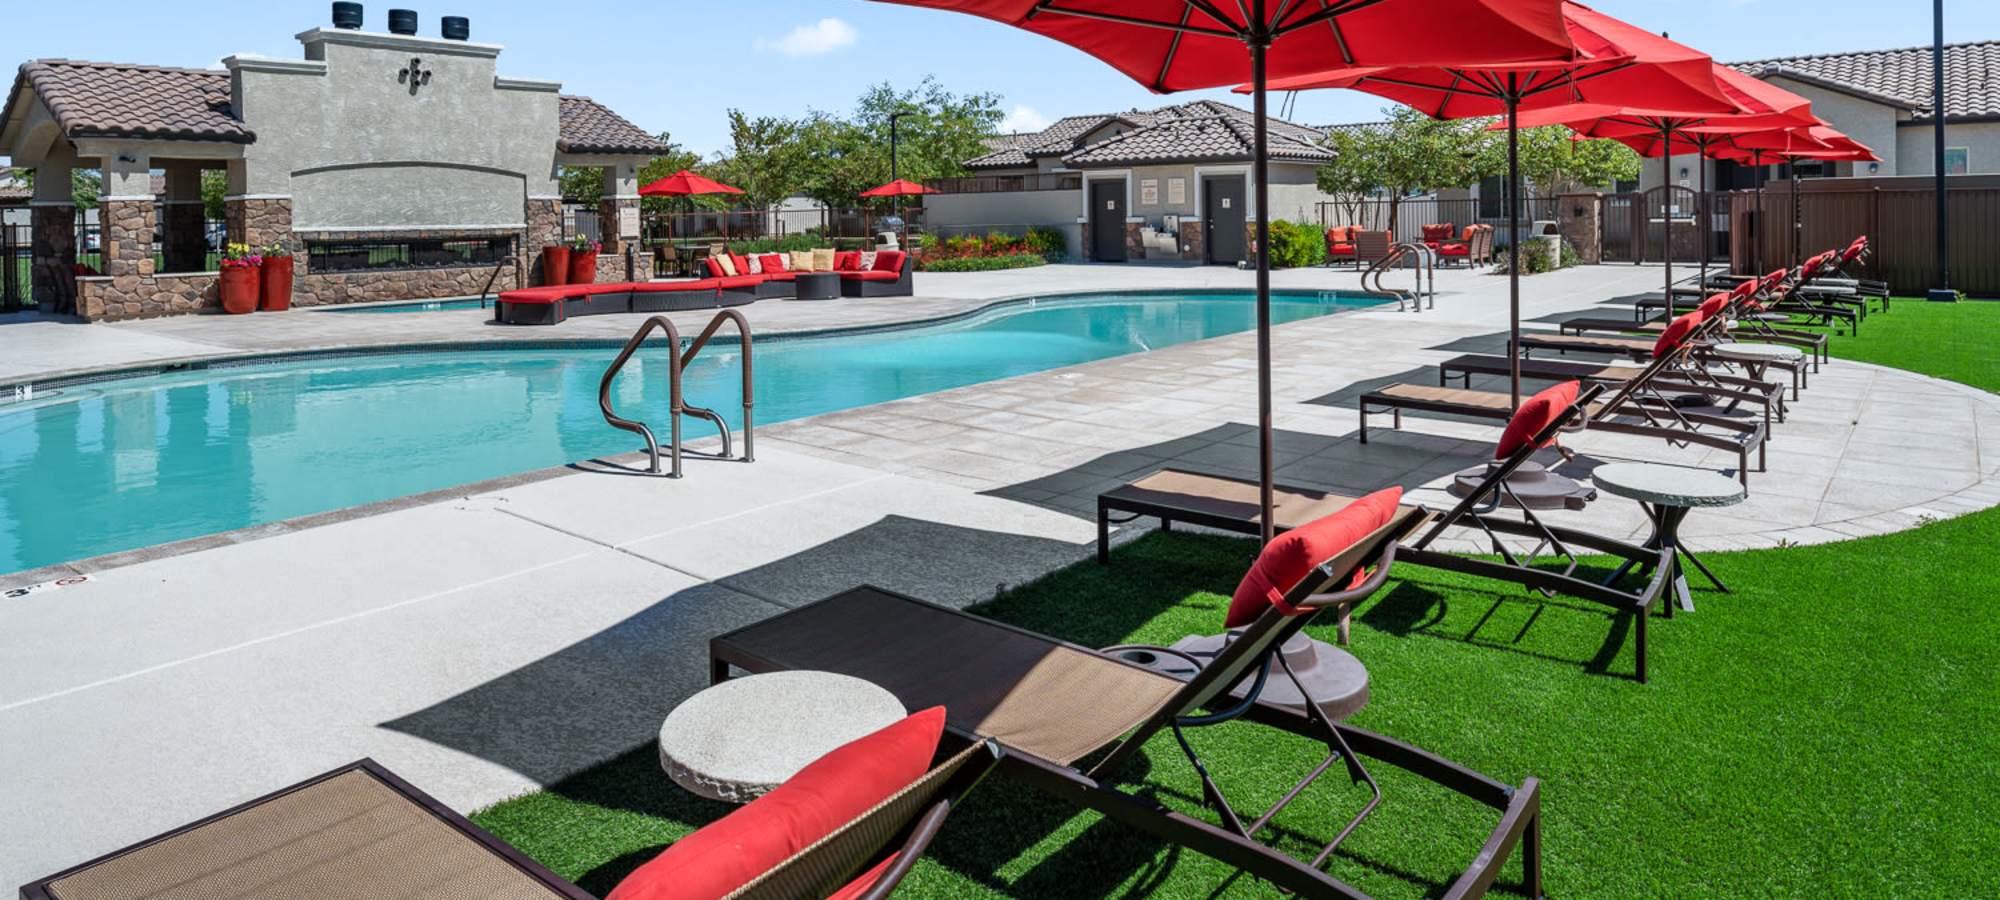 Resort-style pool at TerraLane on Cotton in Surprise, Arizona